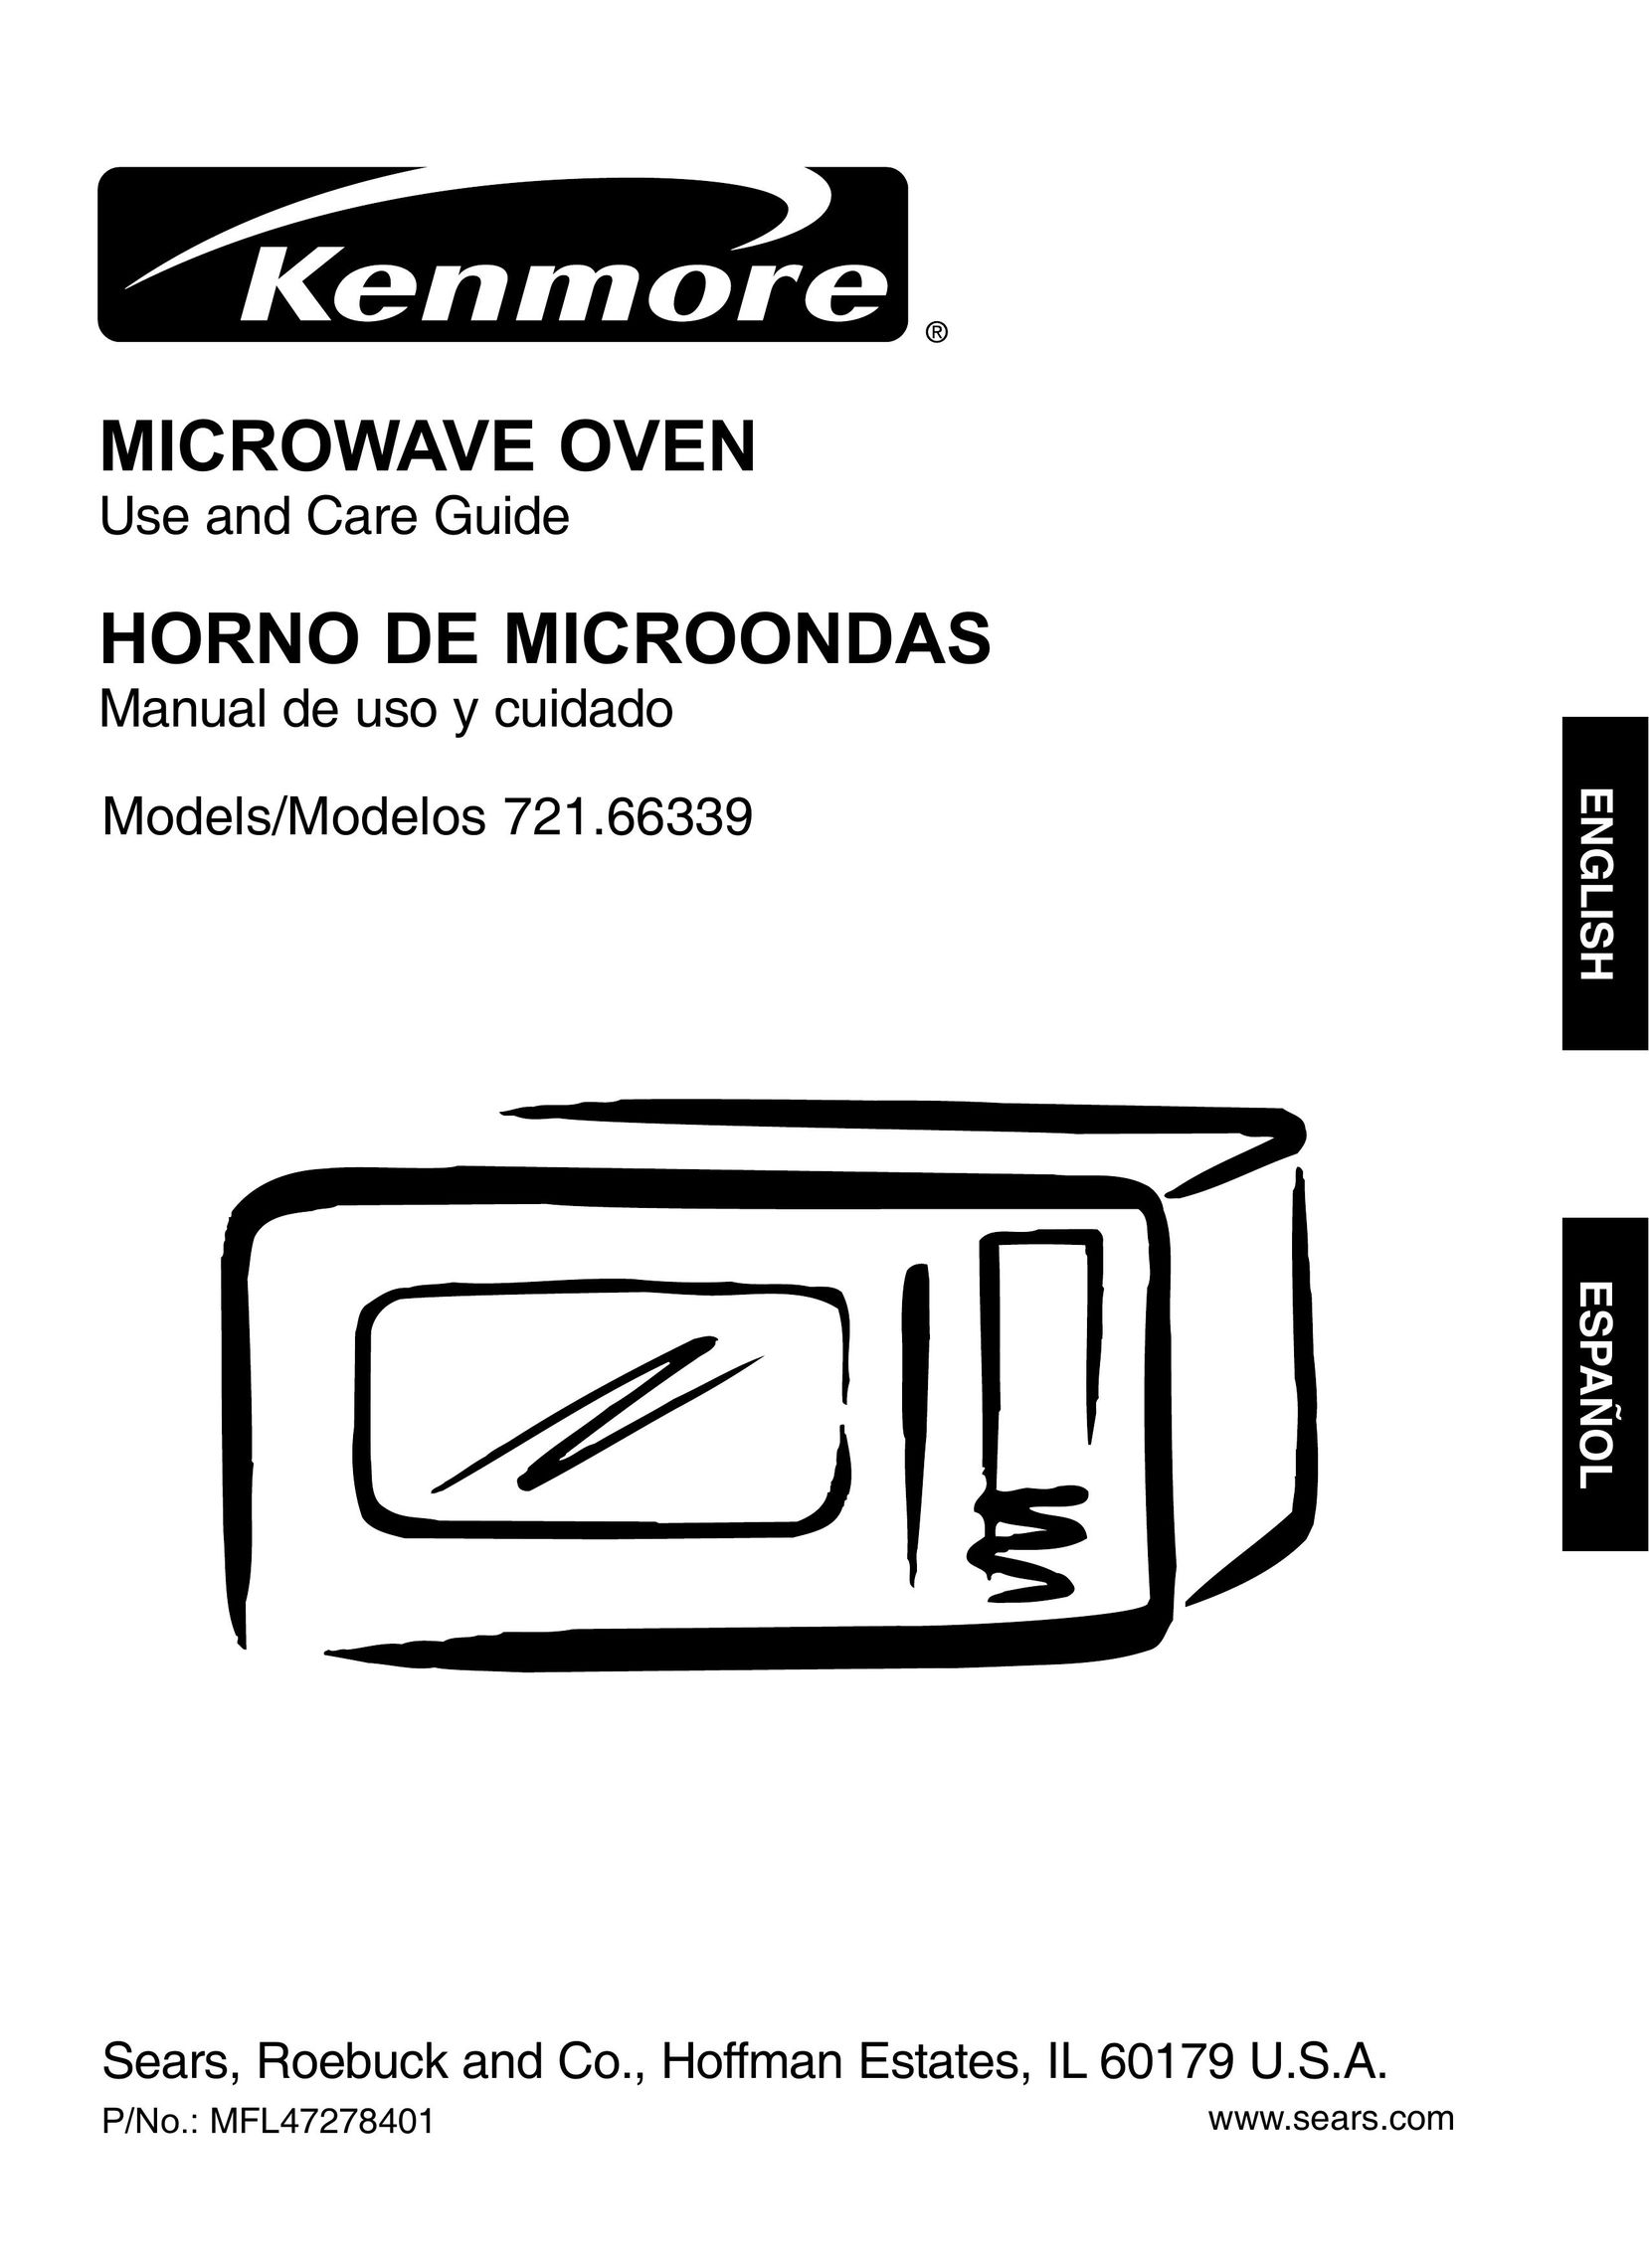 GE 721.66339 Microwave Oven User Manual